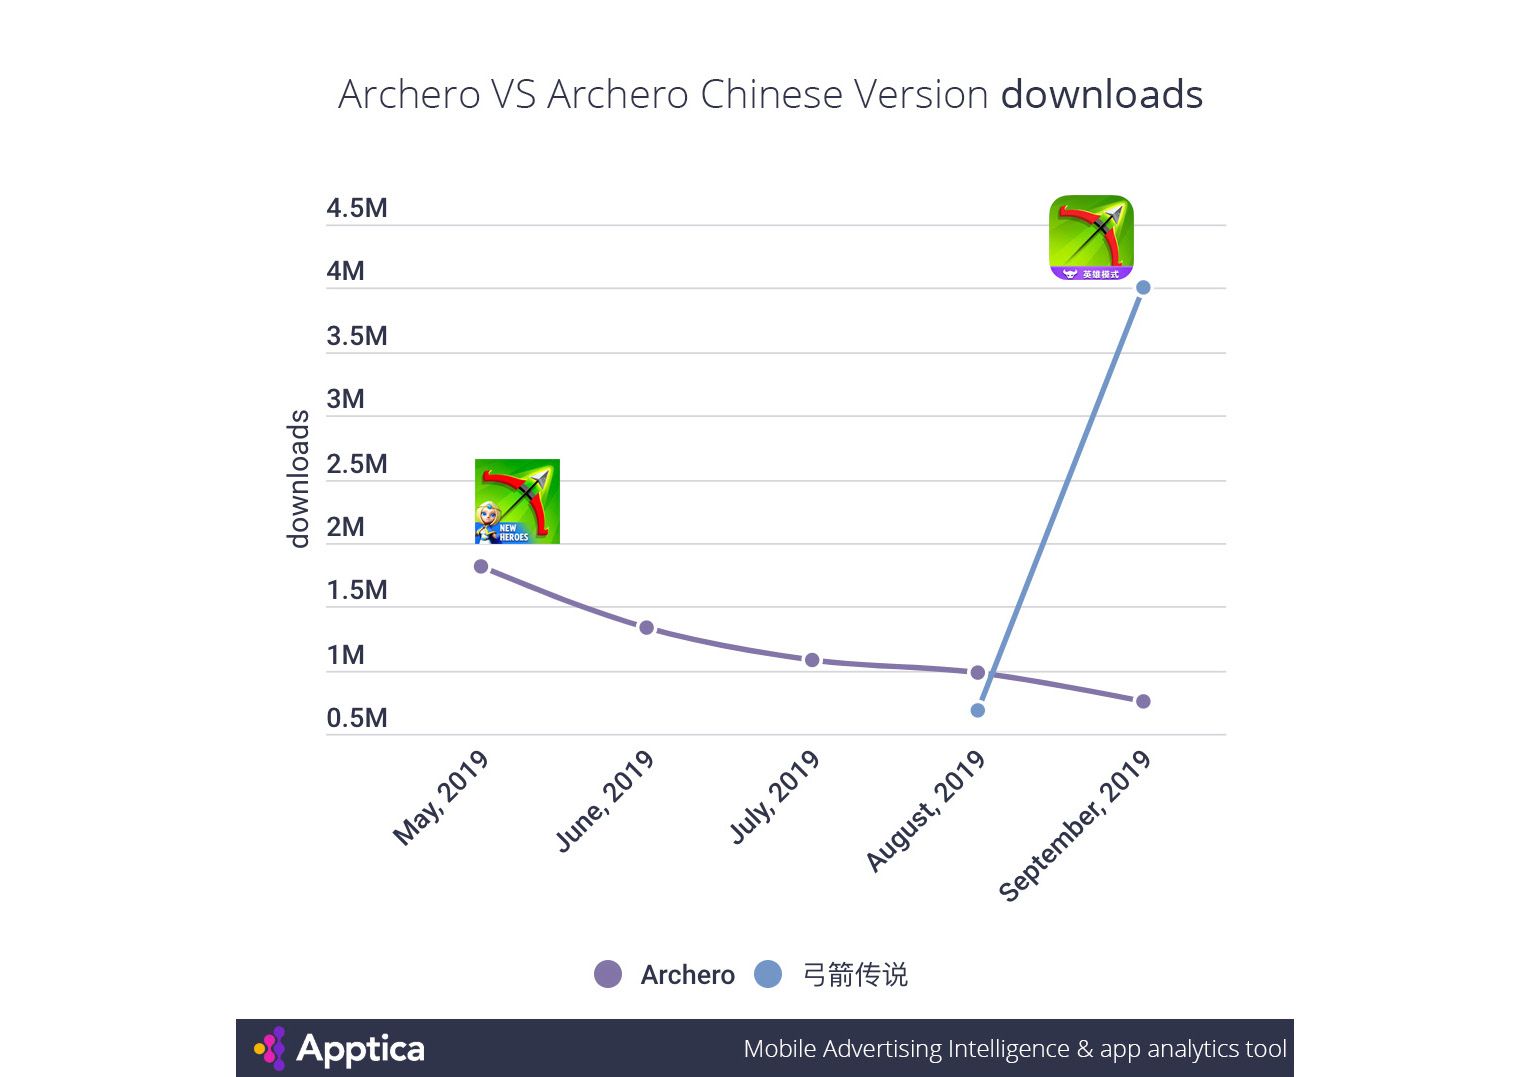 Archero downloads